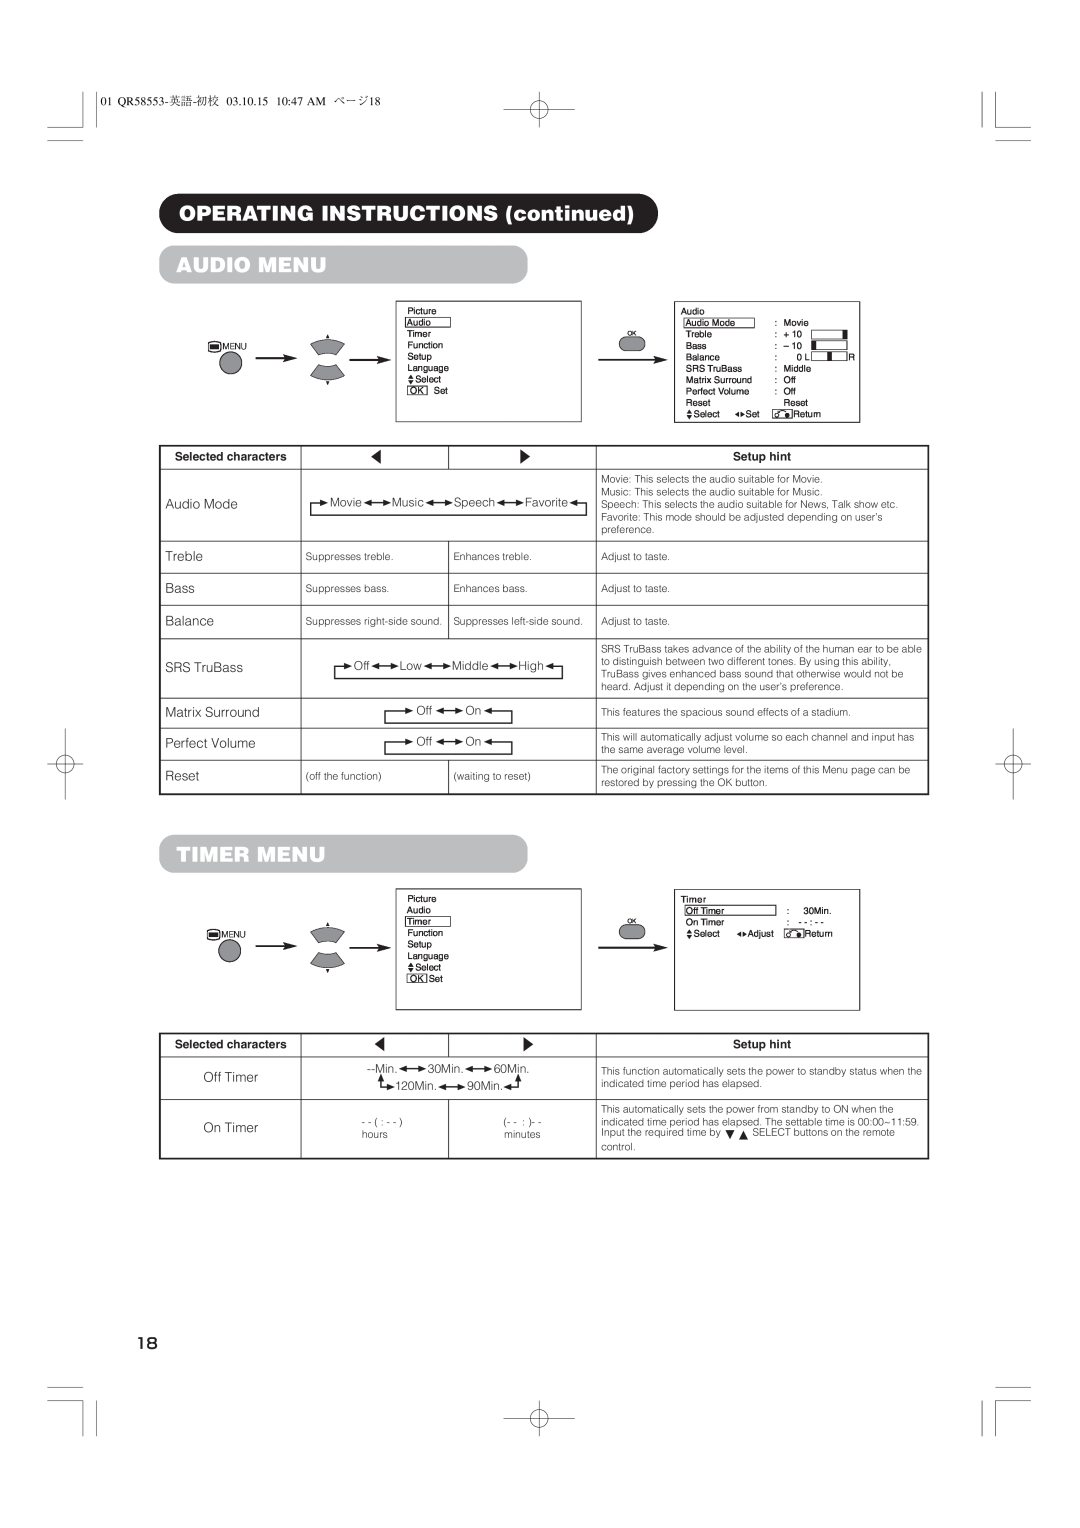 Hitachi 42PD5000 user manual OPERATING INSTRUCTIONS continued AUDIO MENU, Timer Menu, Perfect Volume Reset 